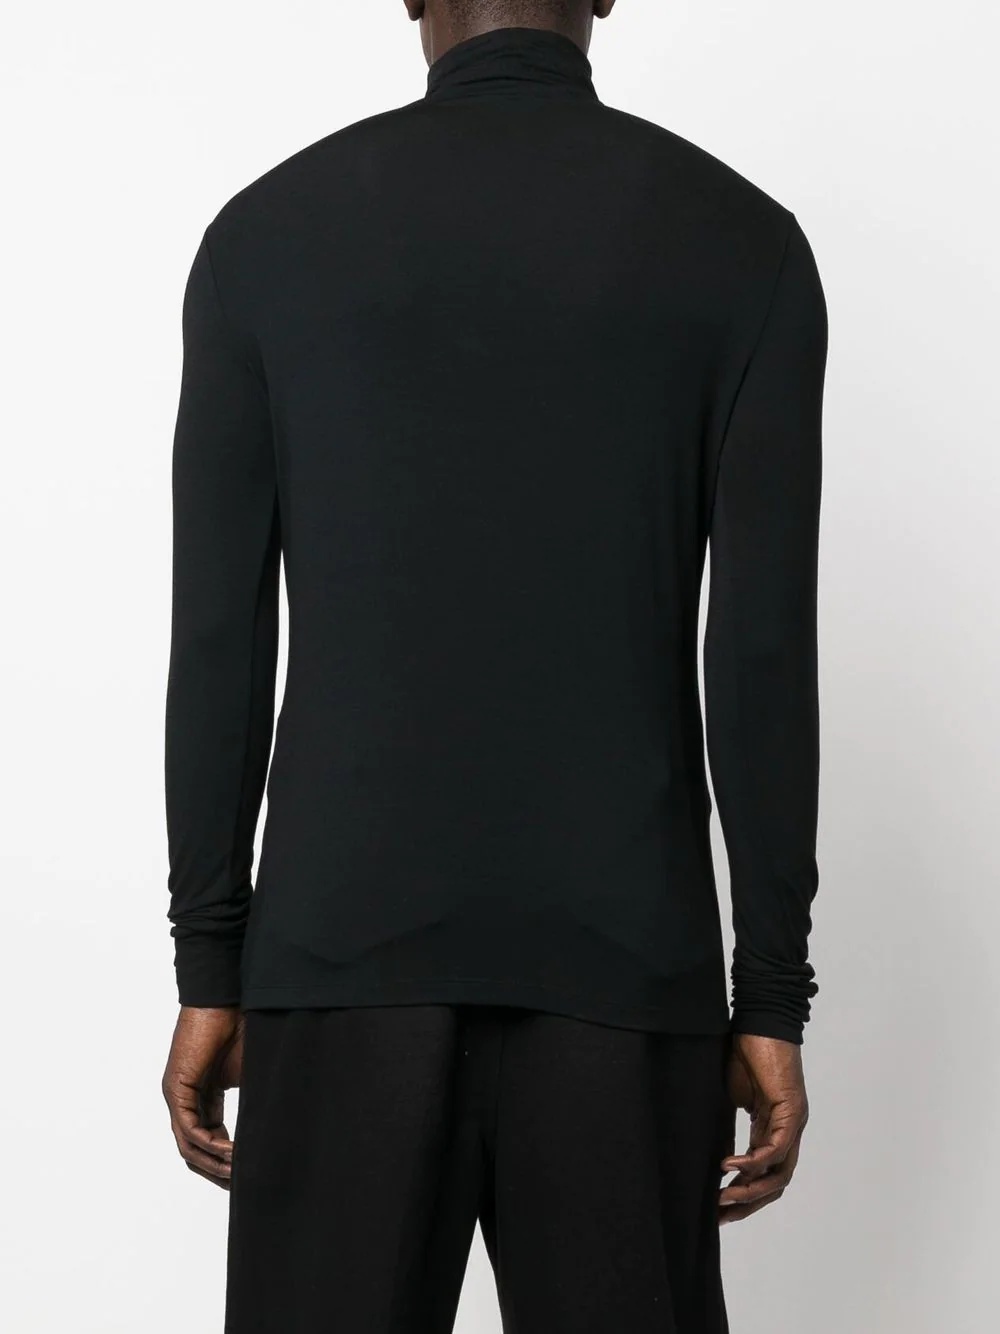 graphic-print high neck sweater - 4